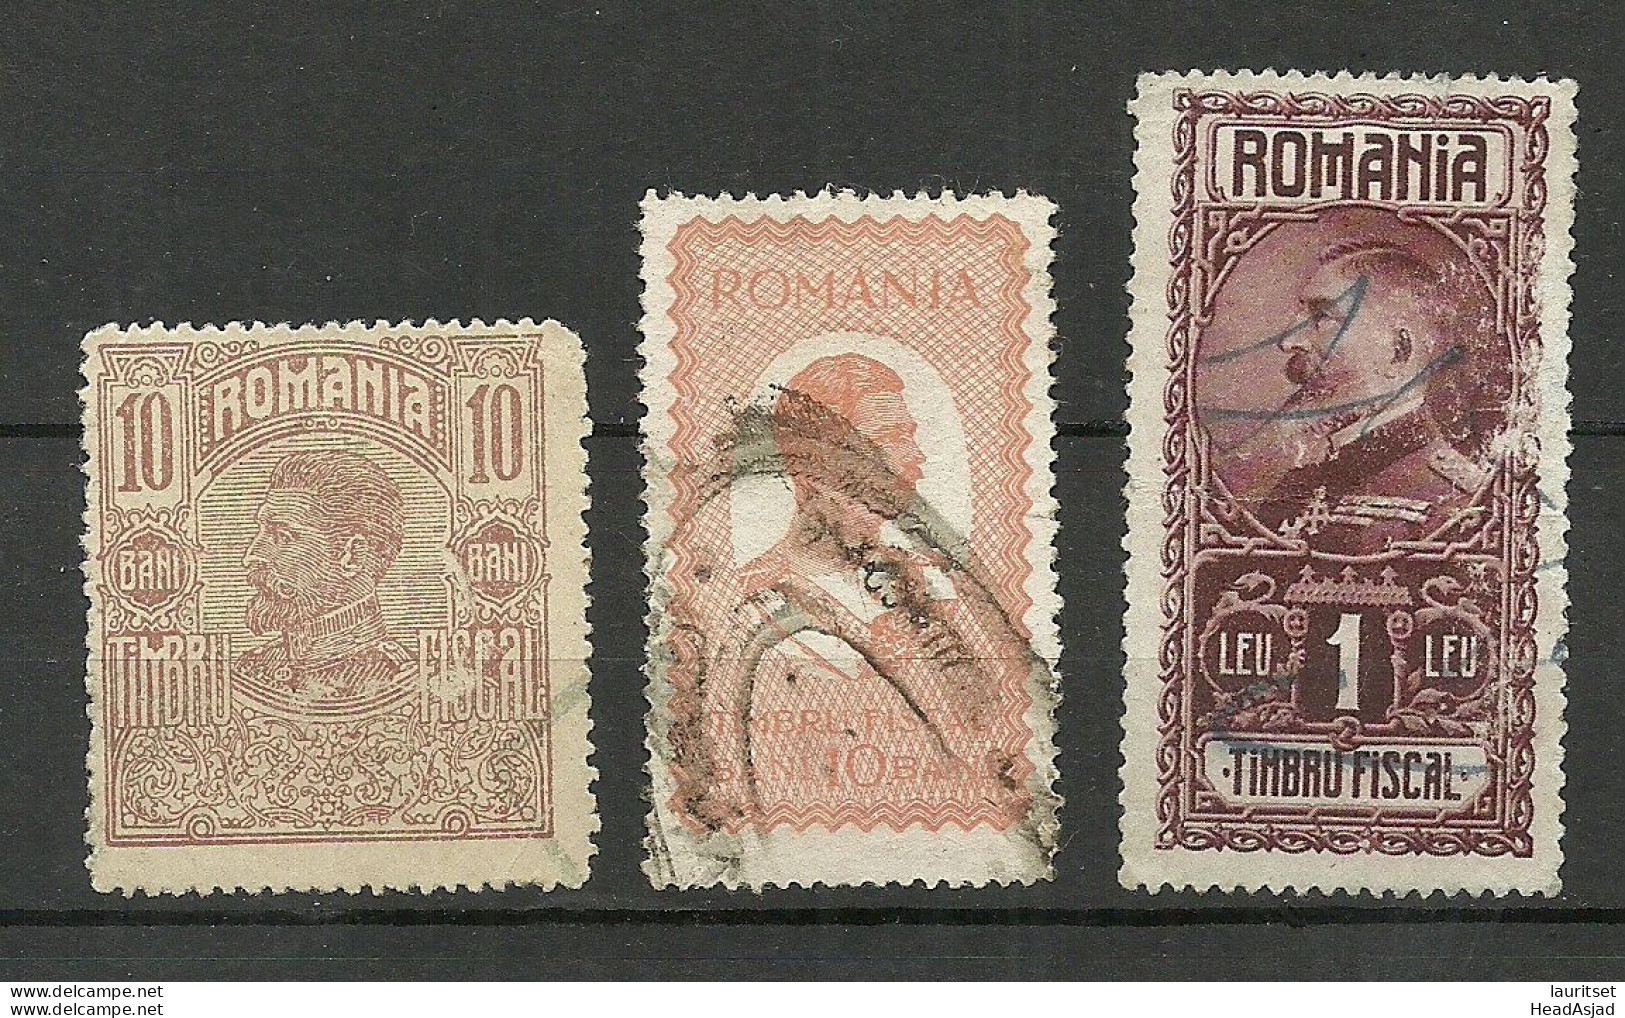 ROMANIA ROMANA Rumänien - 3 Old Revenue Tax Fiscal Stamps Timbru Fiscal, O - Revenue Stamps